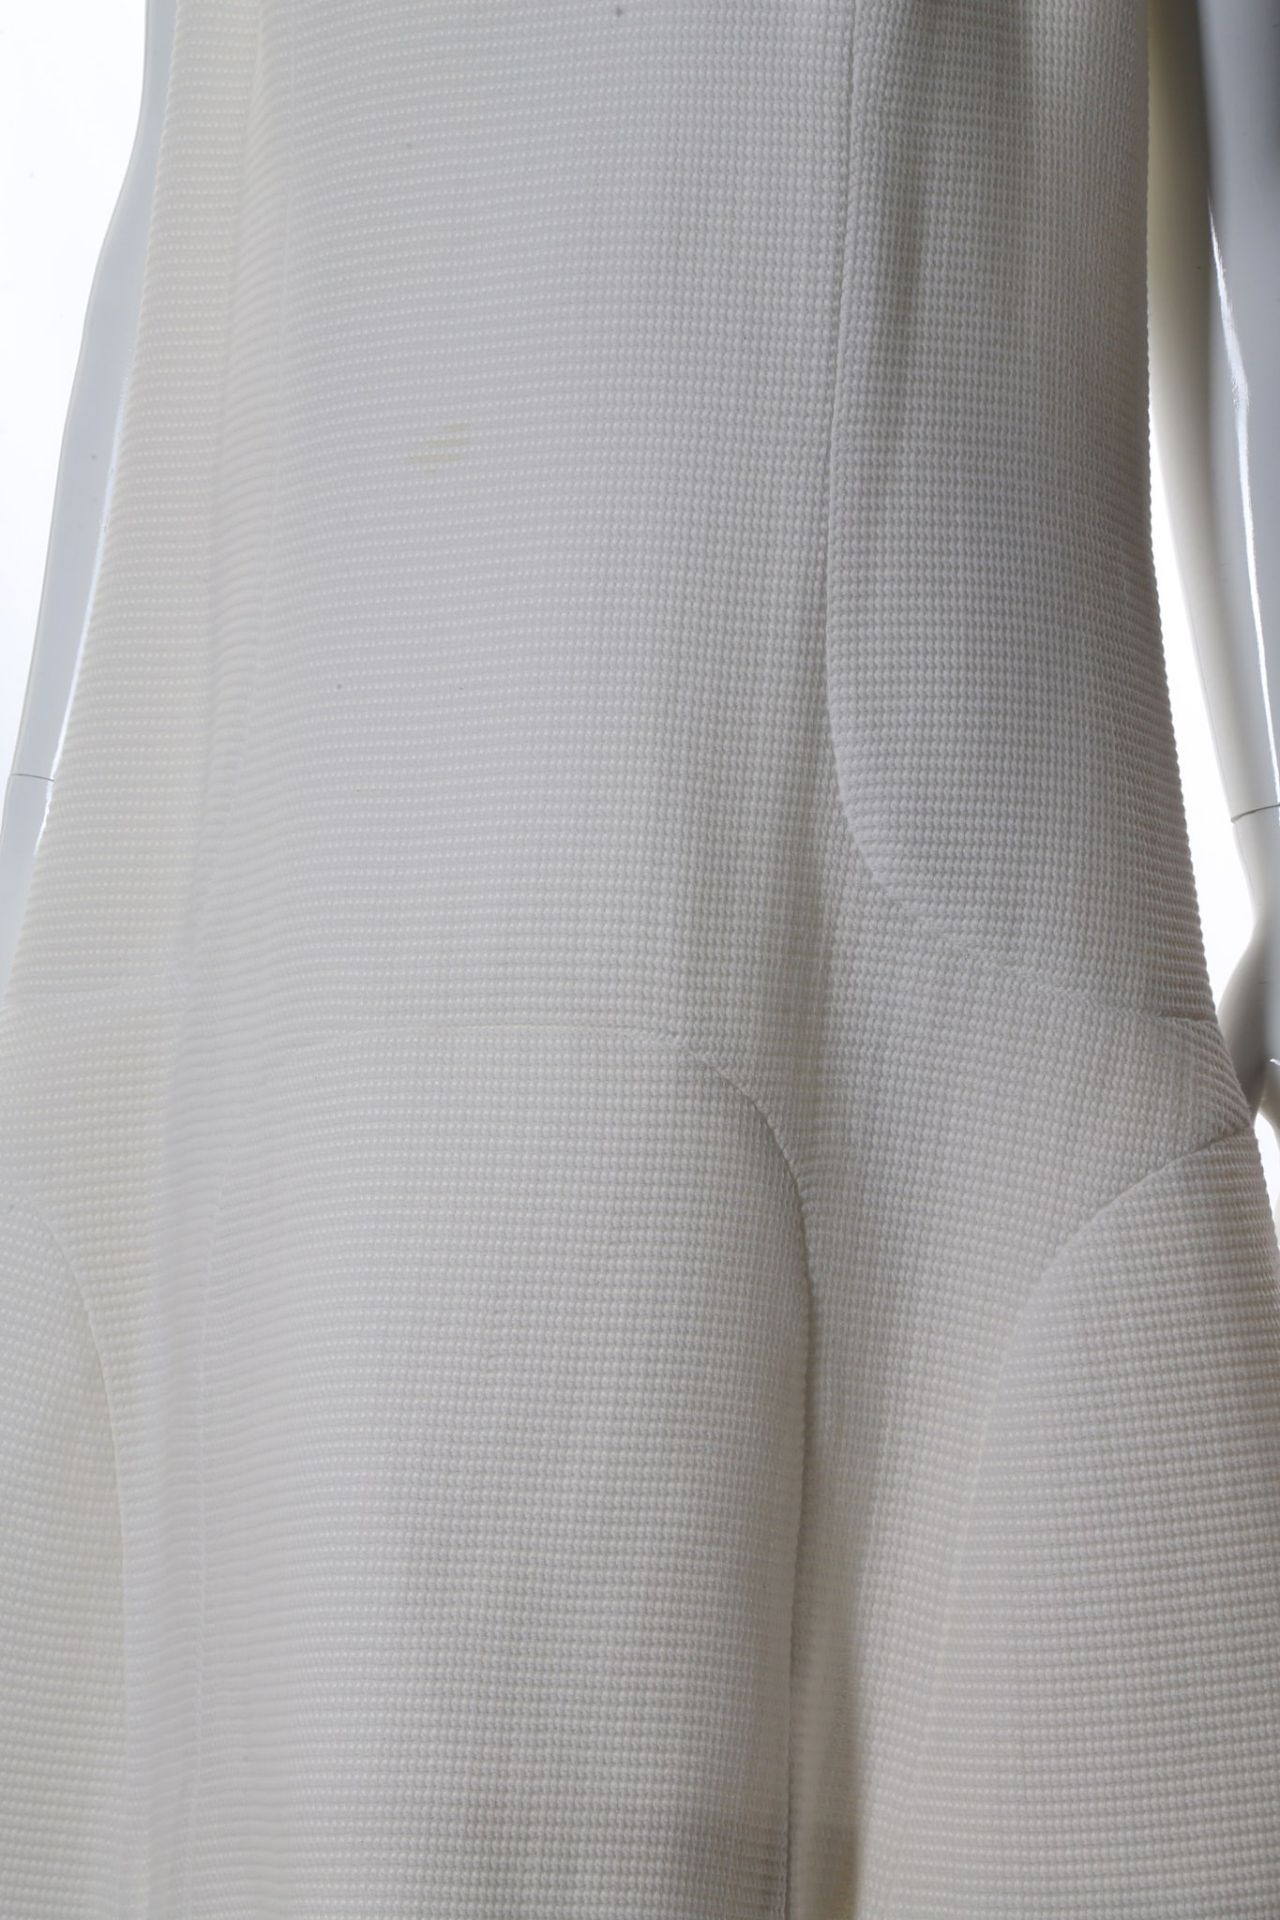 Chanel White Waffle Cotton Dress, 2010s, 60s inspi - Bild 4 aus 5